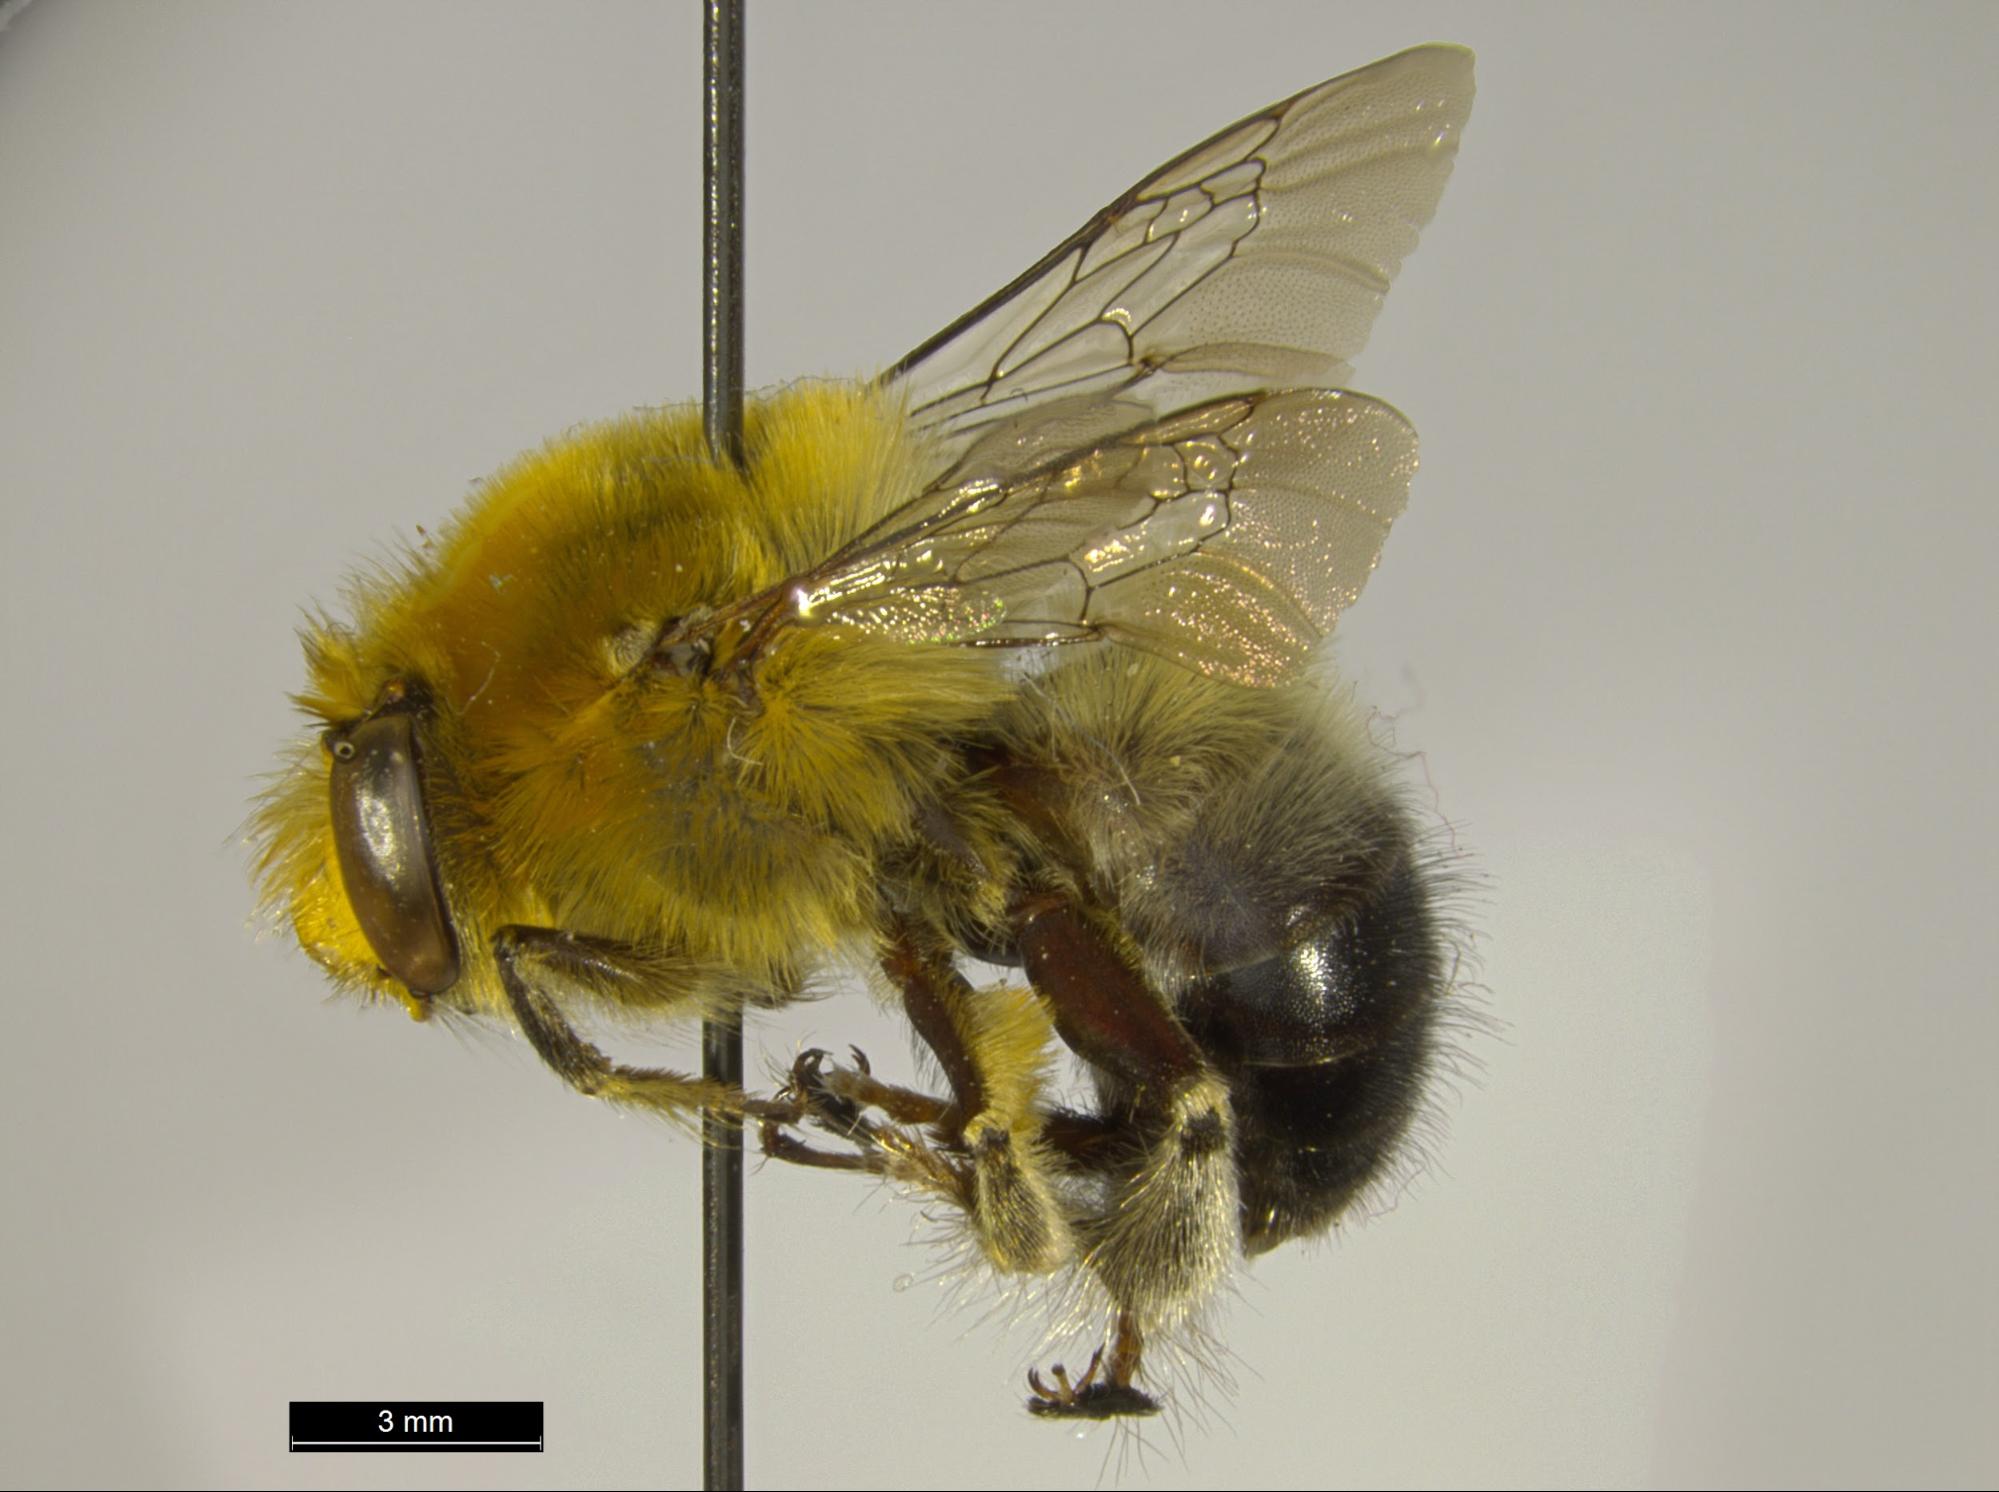 a bee